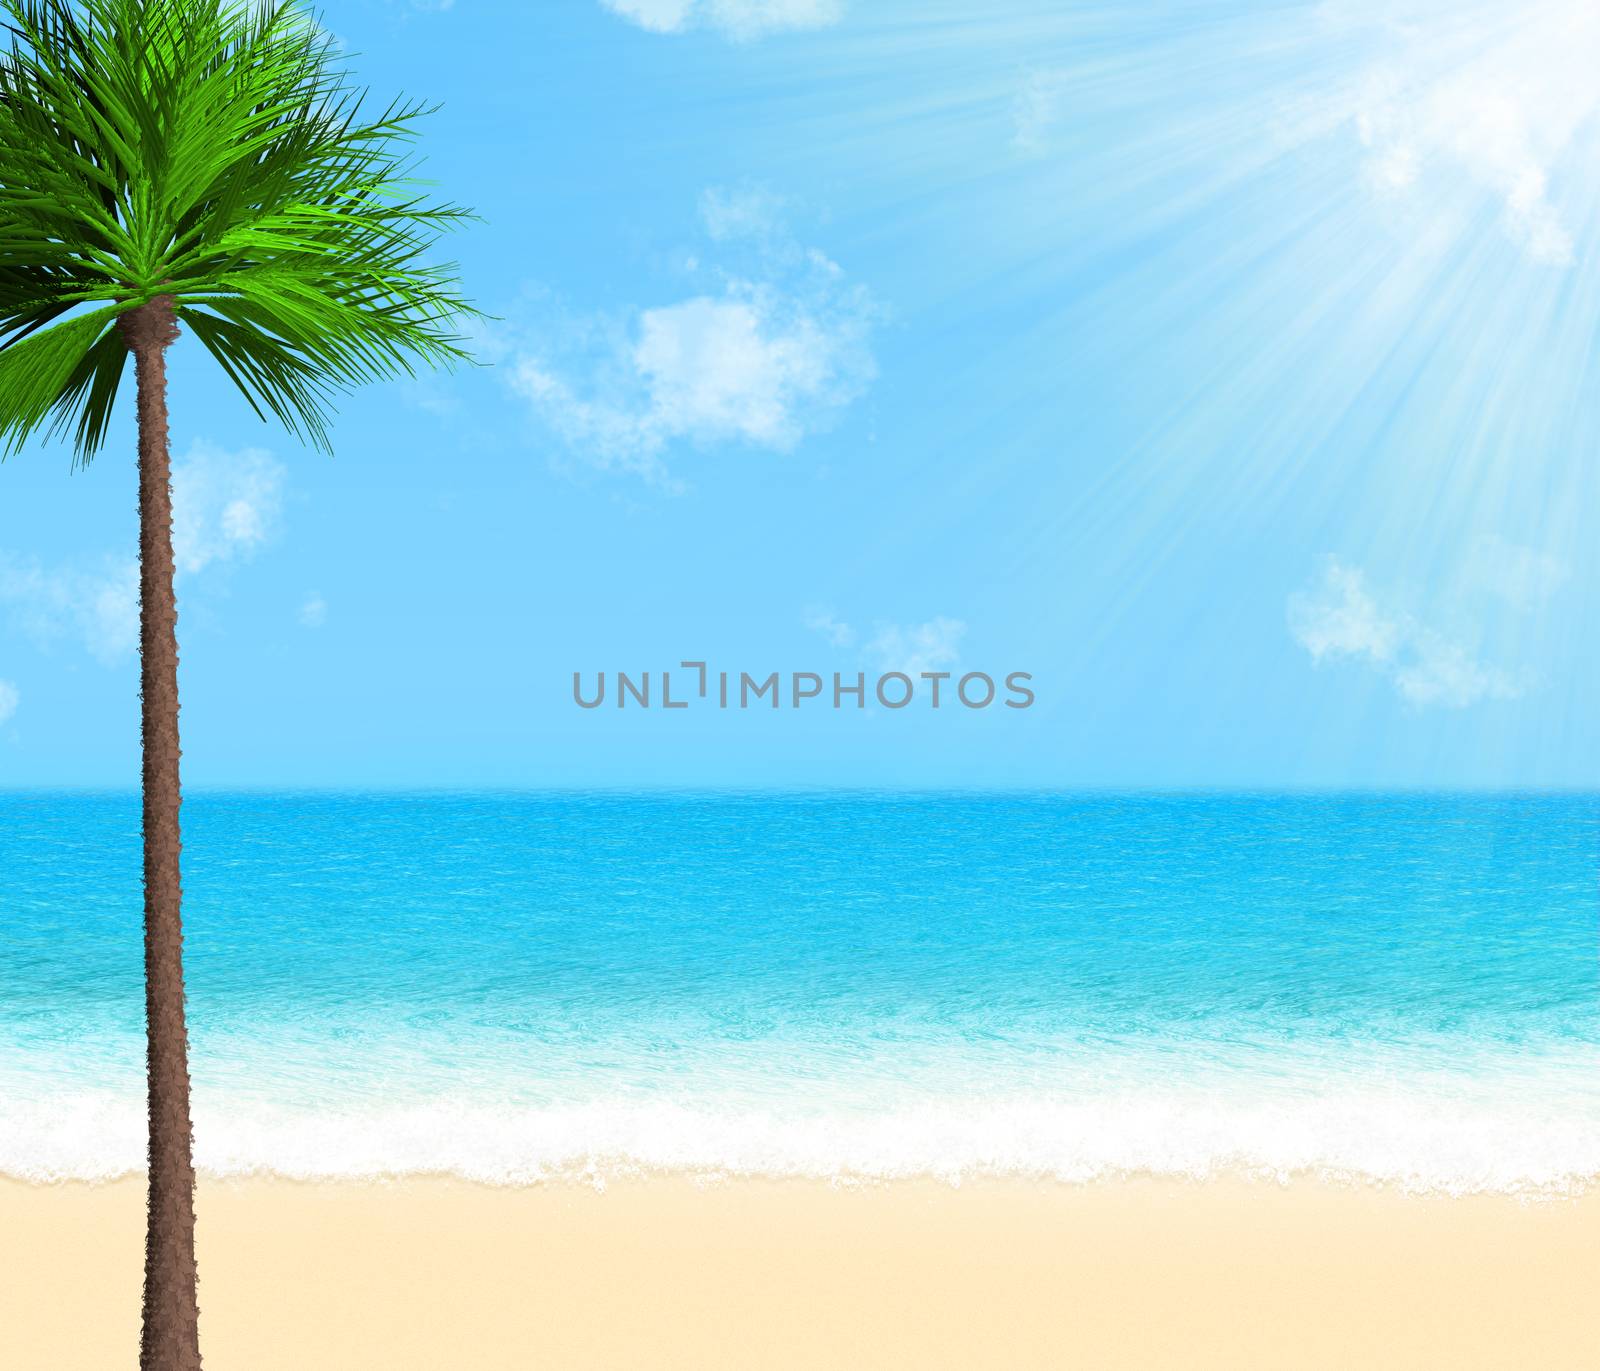 Summer beach realistic illustration. Plam tree on the coast in the sunshine.